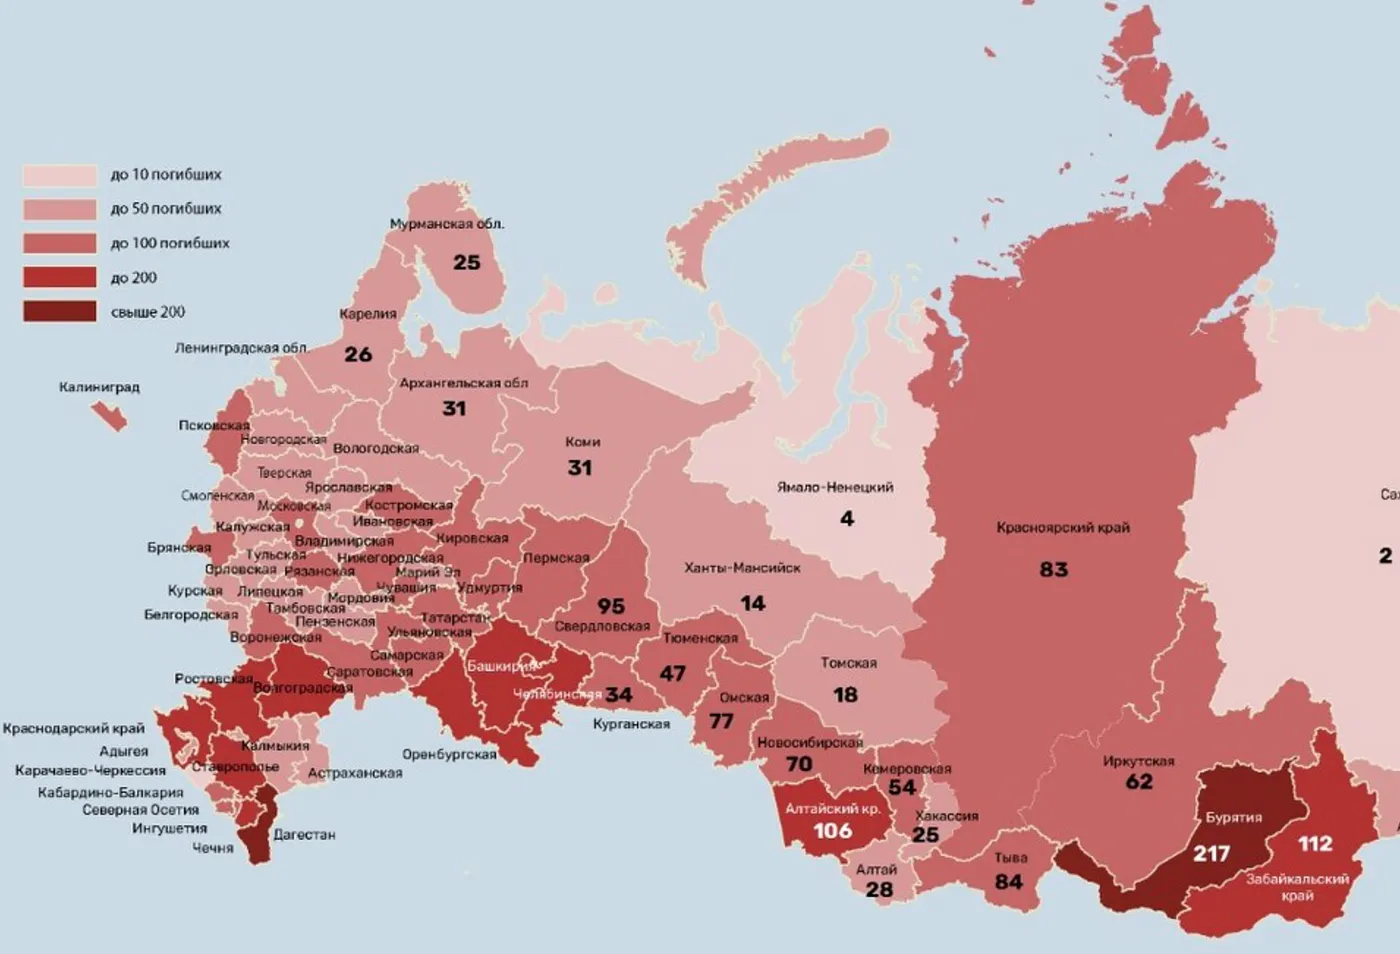 Map by https://t.me/s/mozhemobyasnit with confirmed Russian deatsh per region